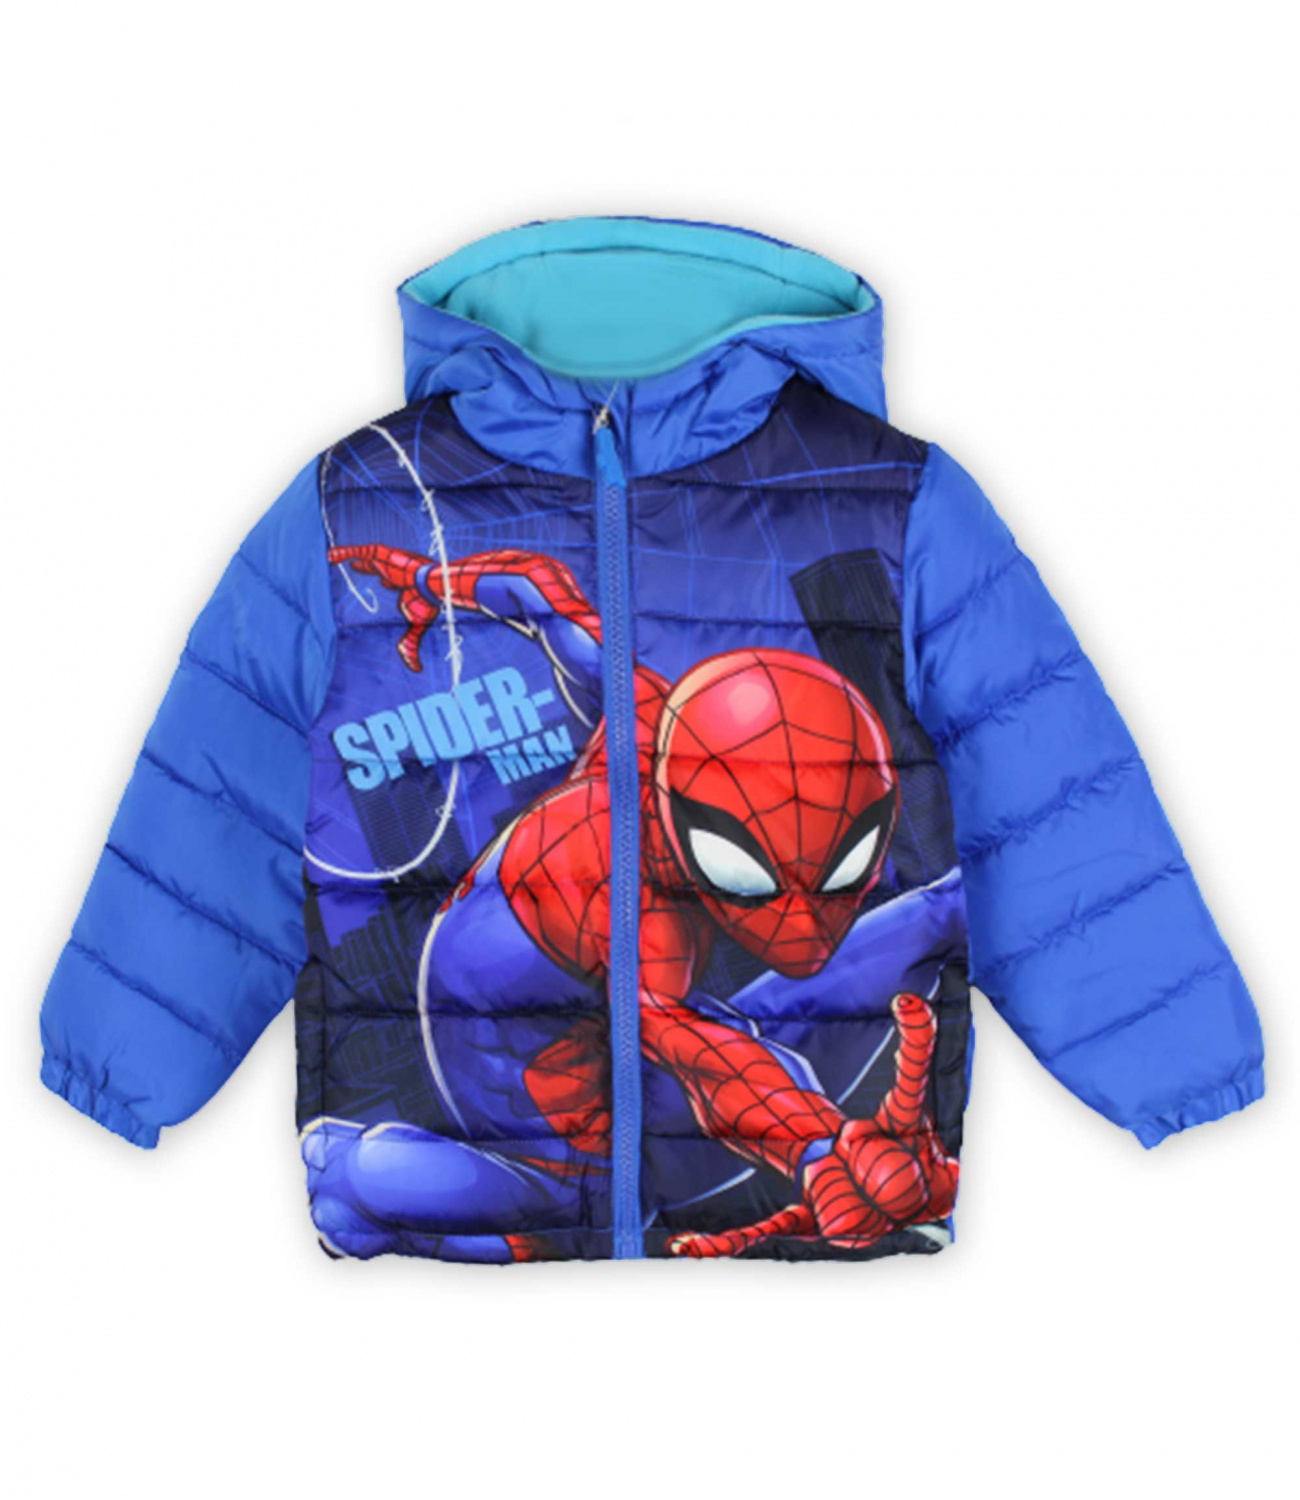 Spider-Man® Jacheta vatuita Albastra 521017